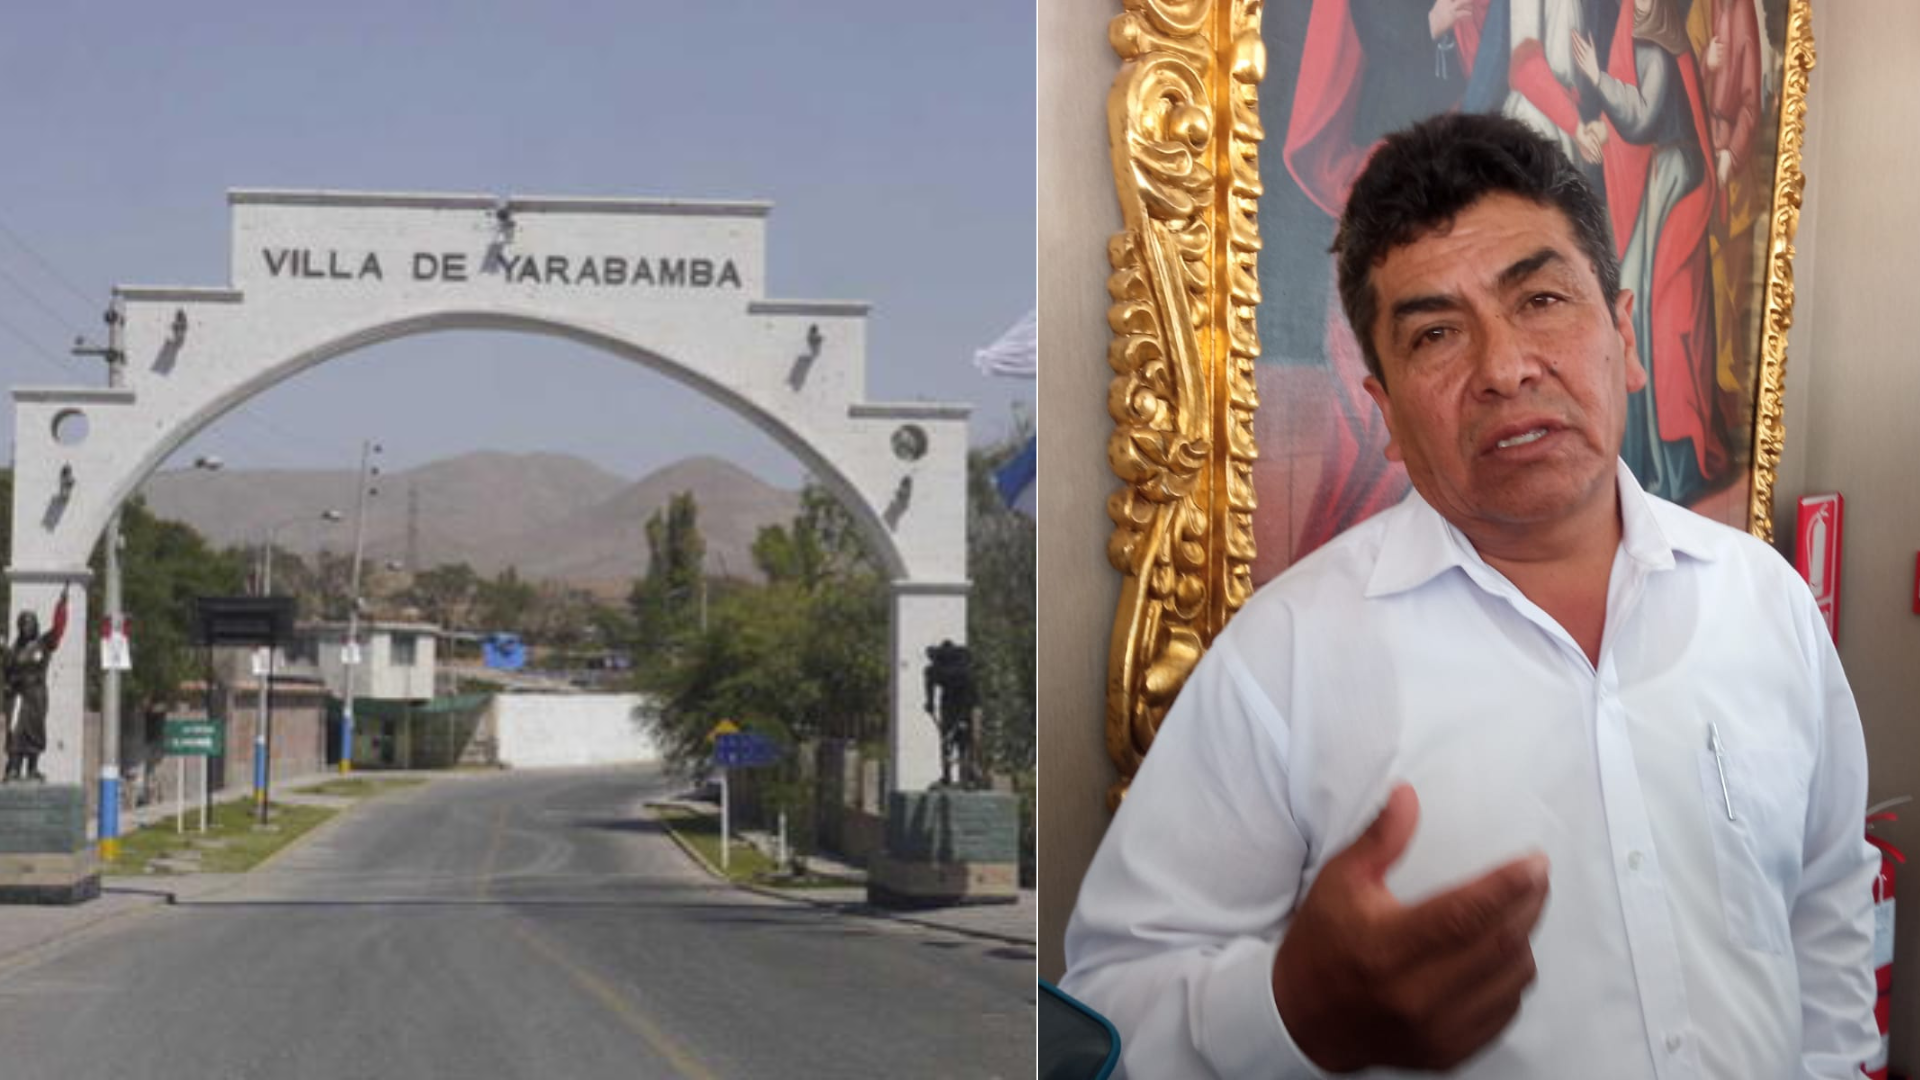 Mayor of Yarabamba has little mining canon investment like his predecessor